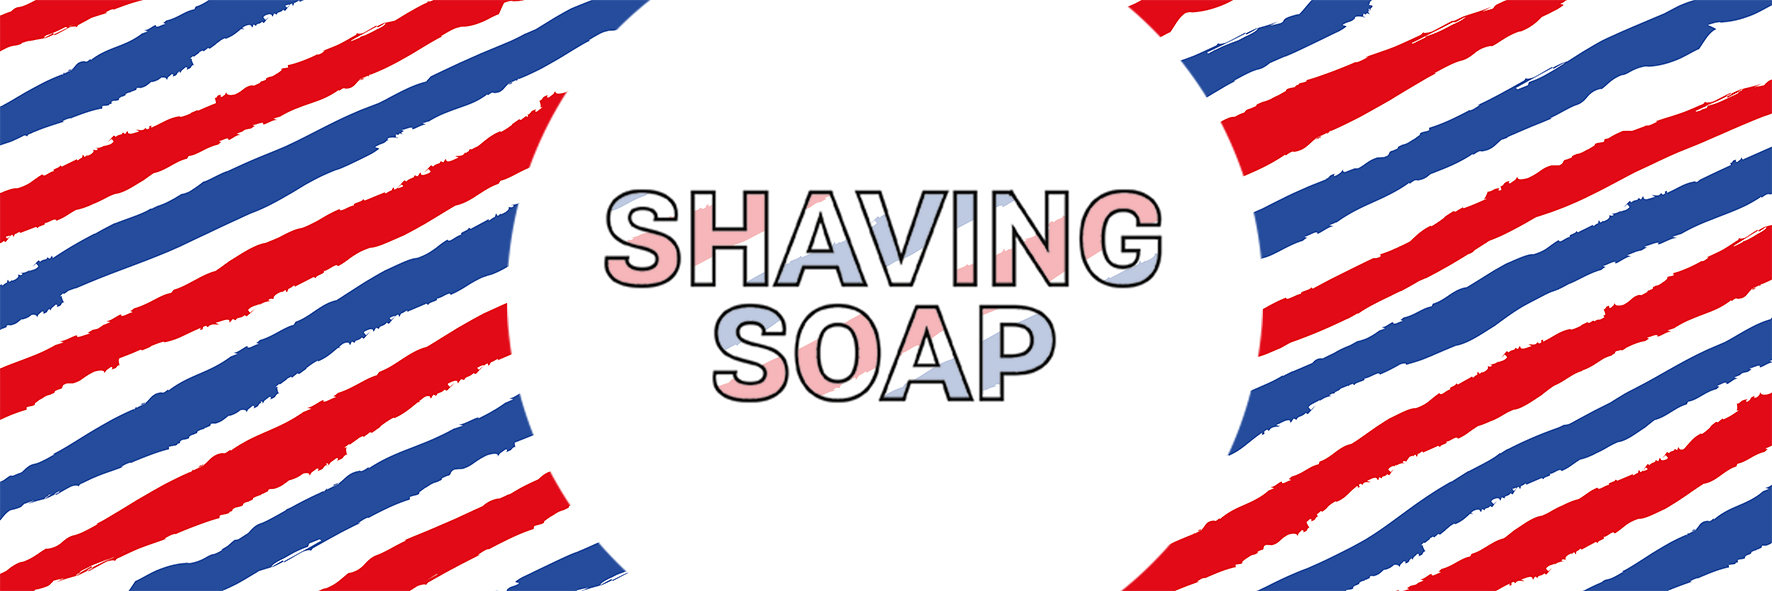 Shaving-Soap